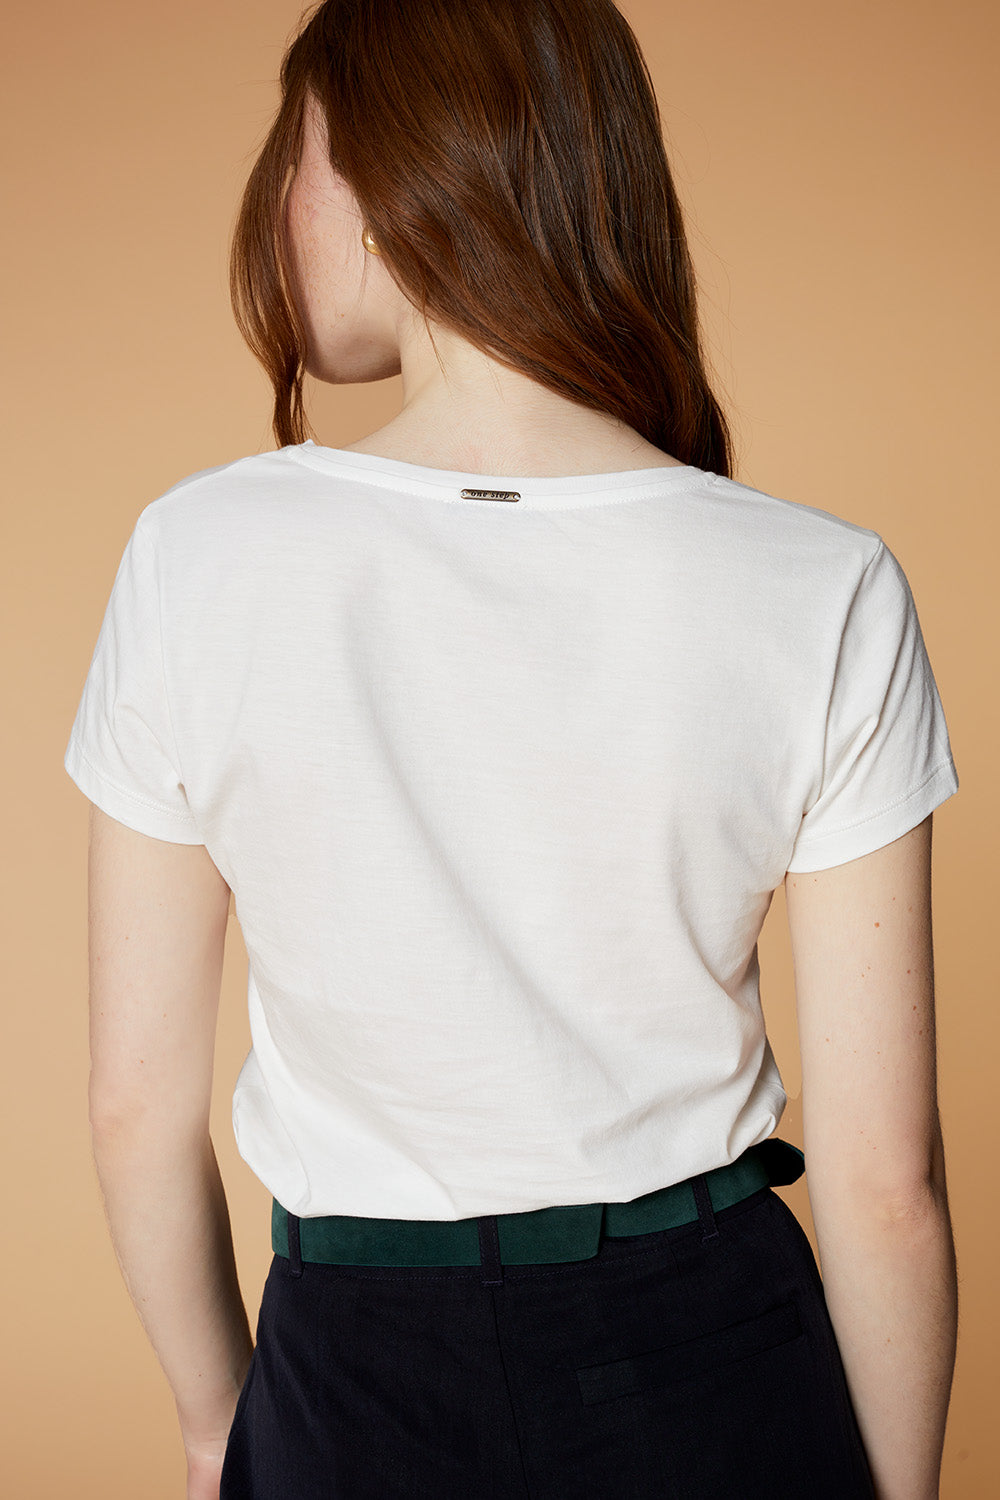 MADONE - T-shirt écru coton bio sérigraphie danseuses